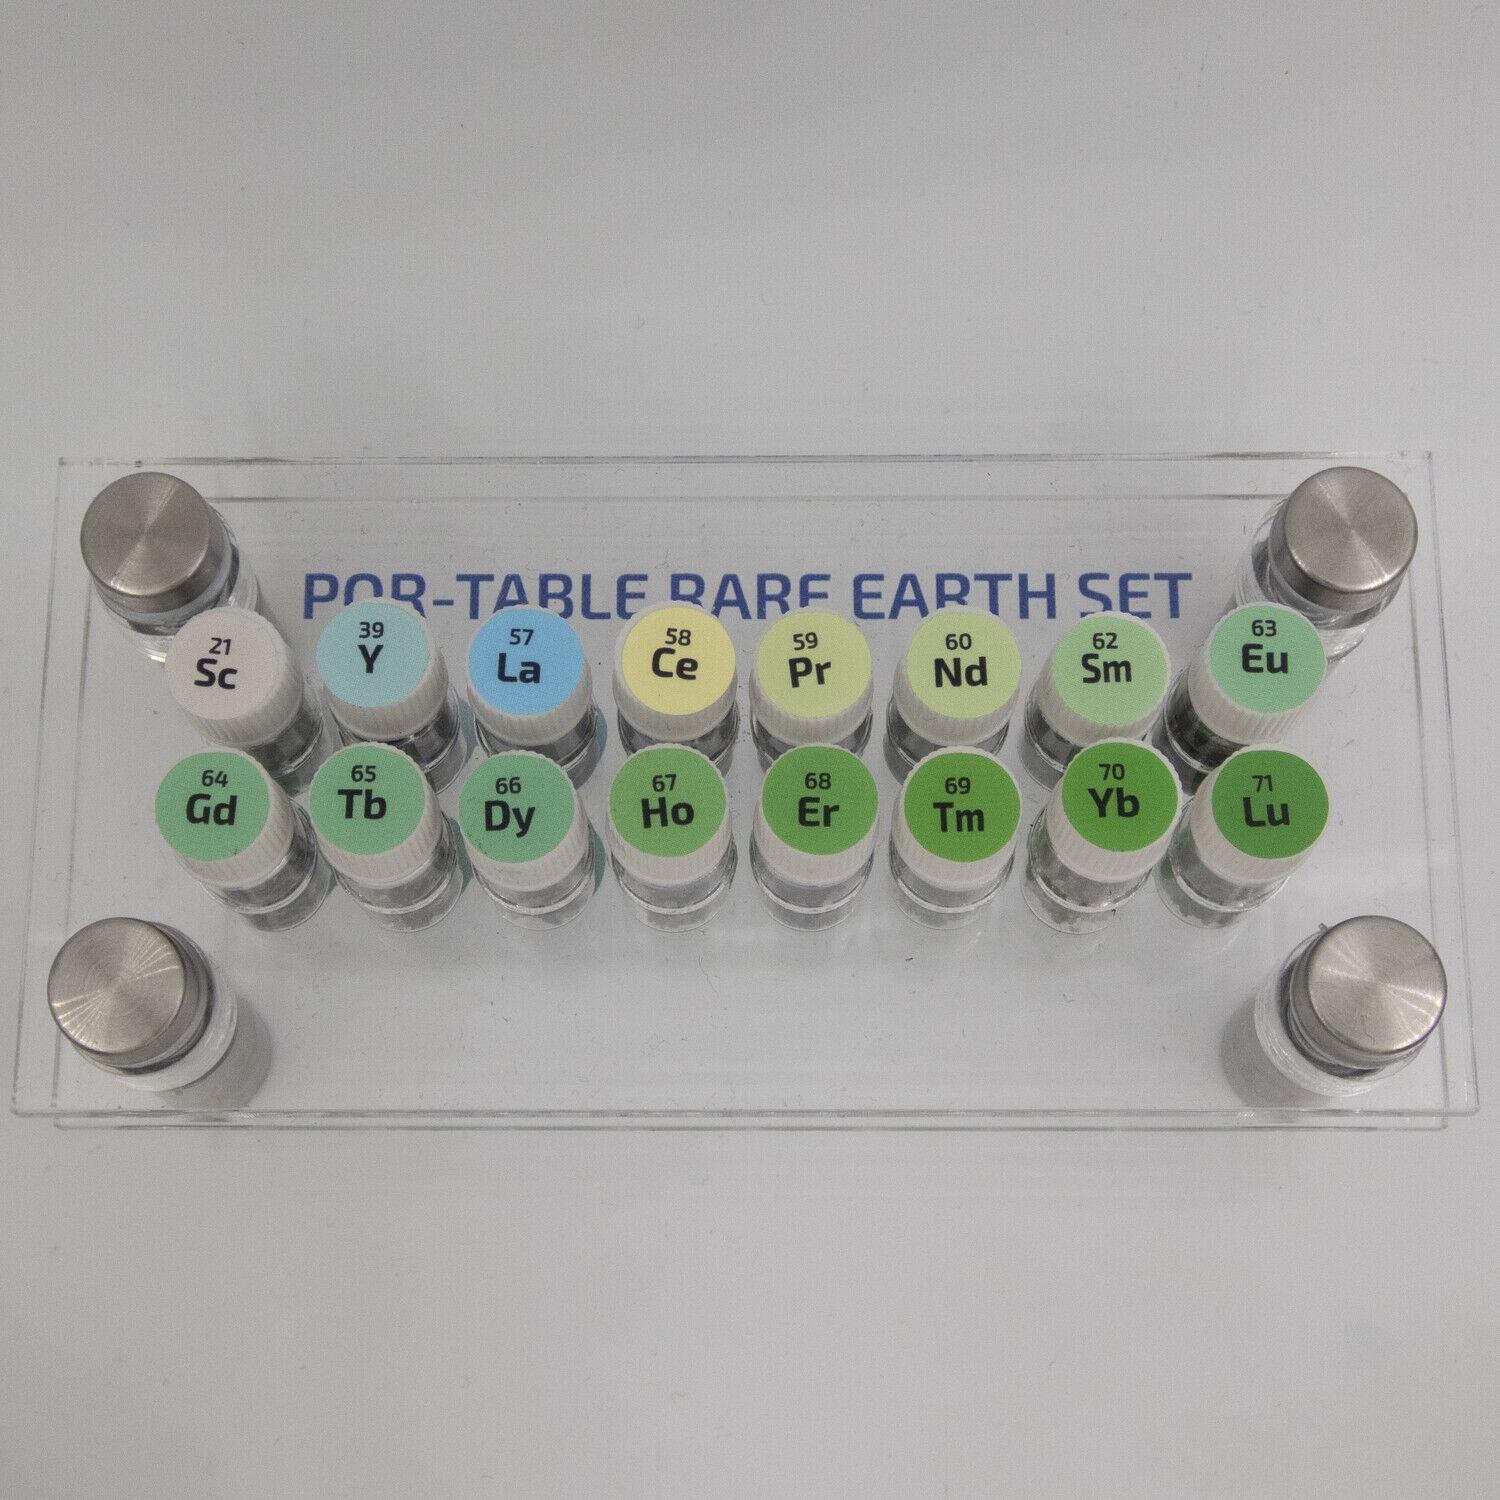 POR-Table Rare Earth Metal Set 0.5g x 16 Bottles Periodic Table Elements Sample